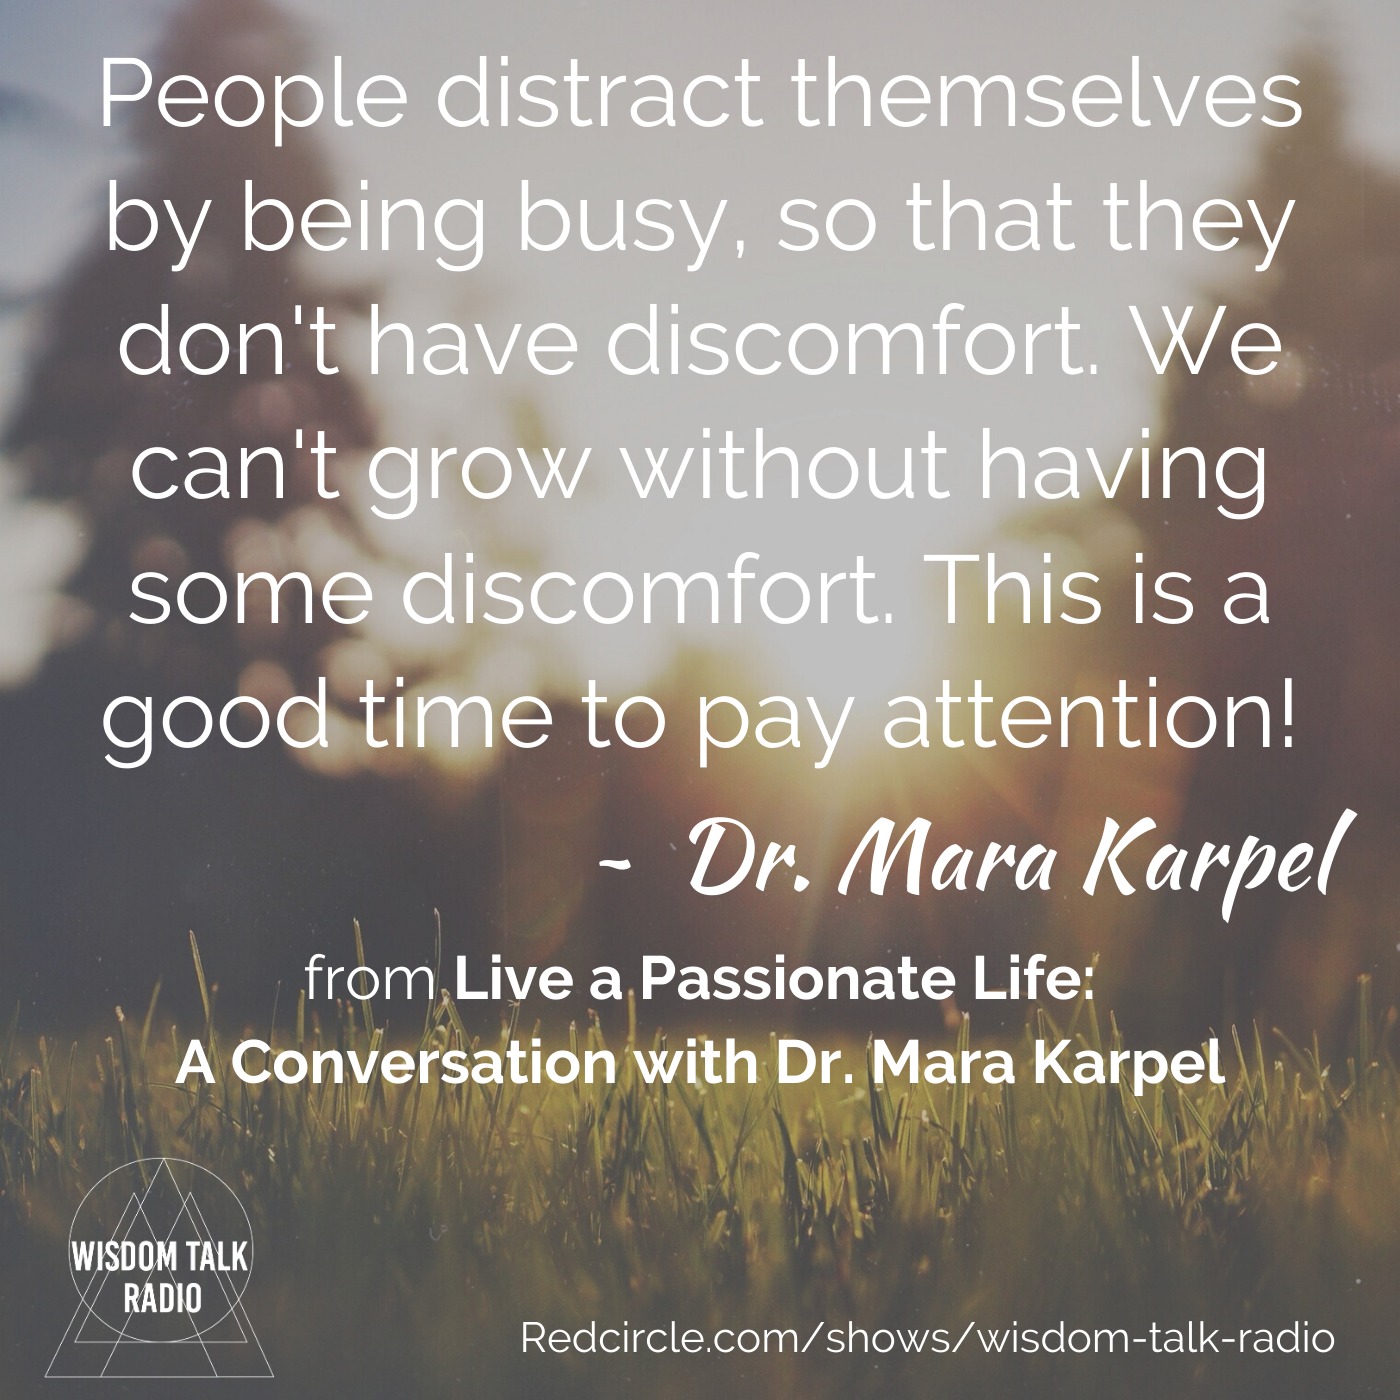 Live a Passionate Life: a Conversation with Dr. Mara Karpel